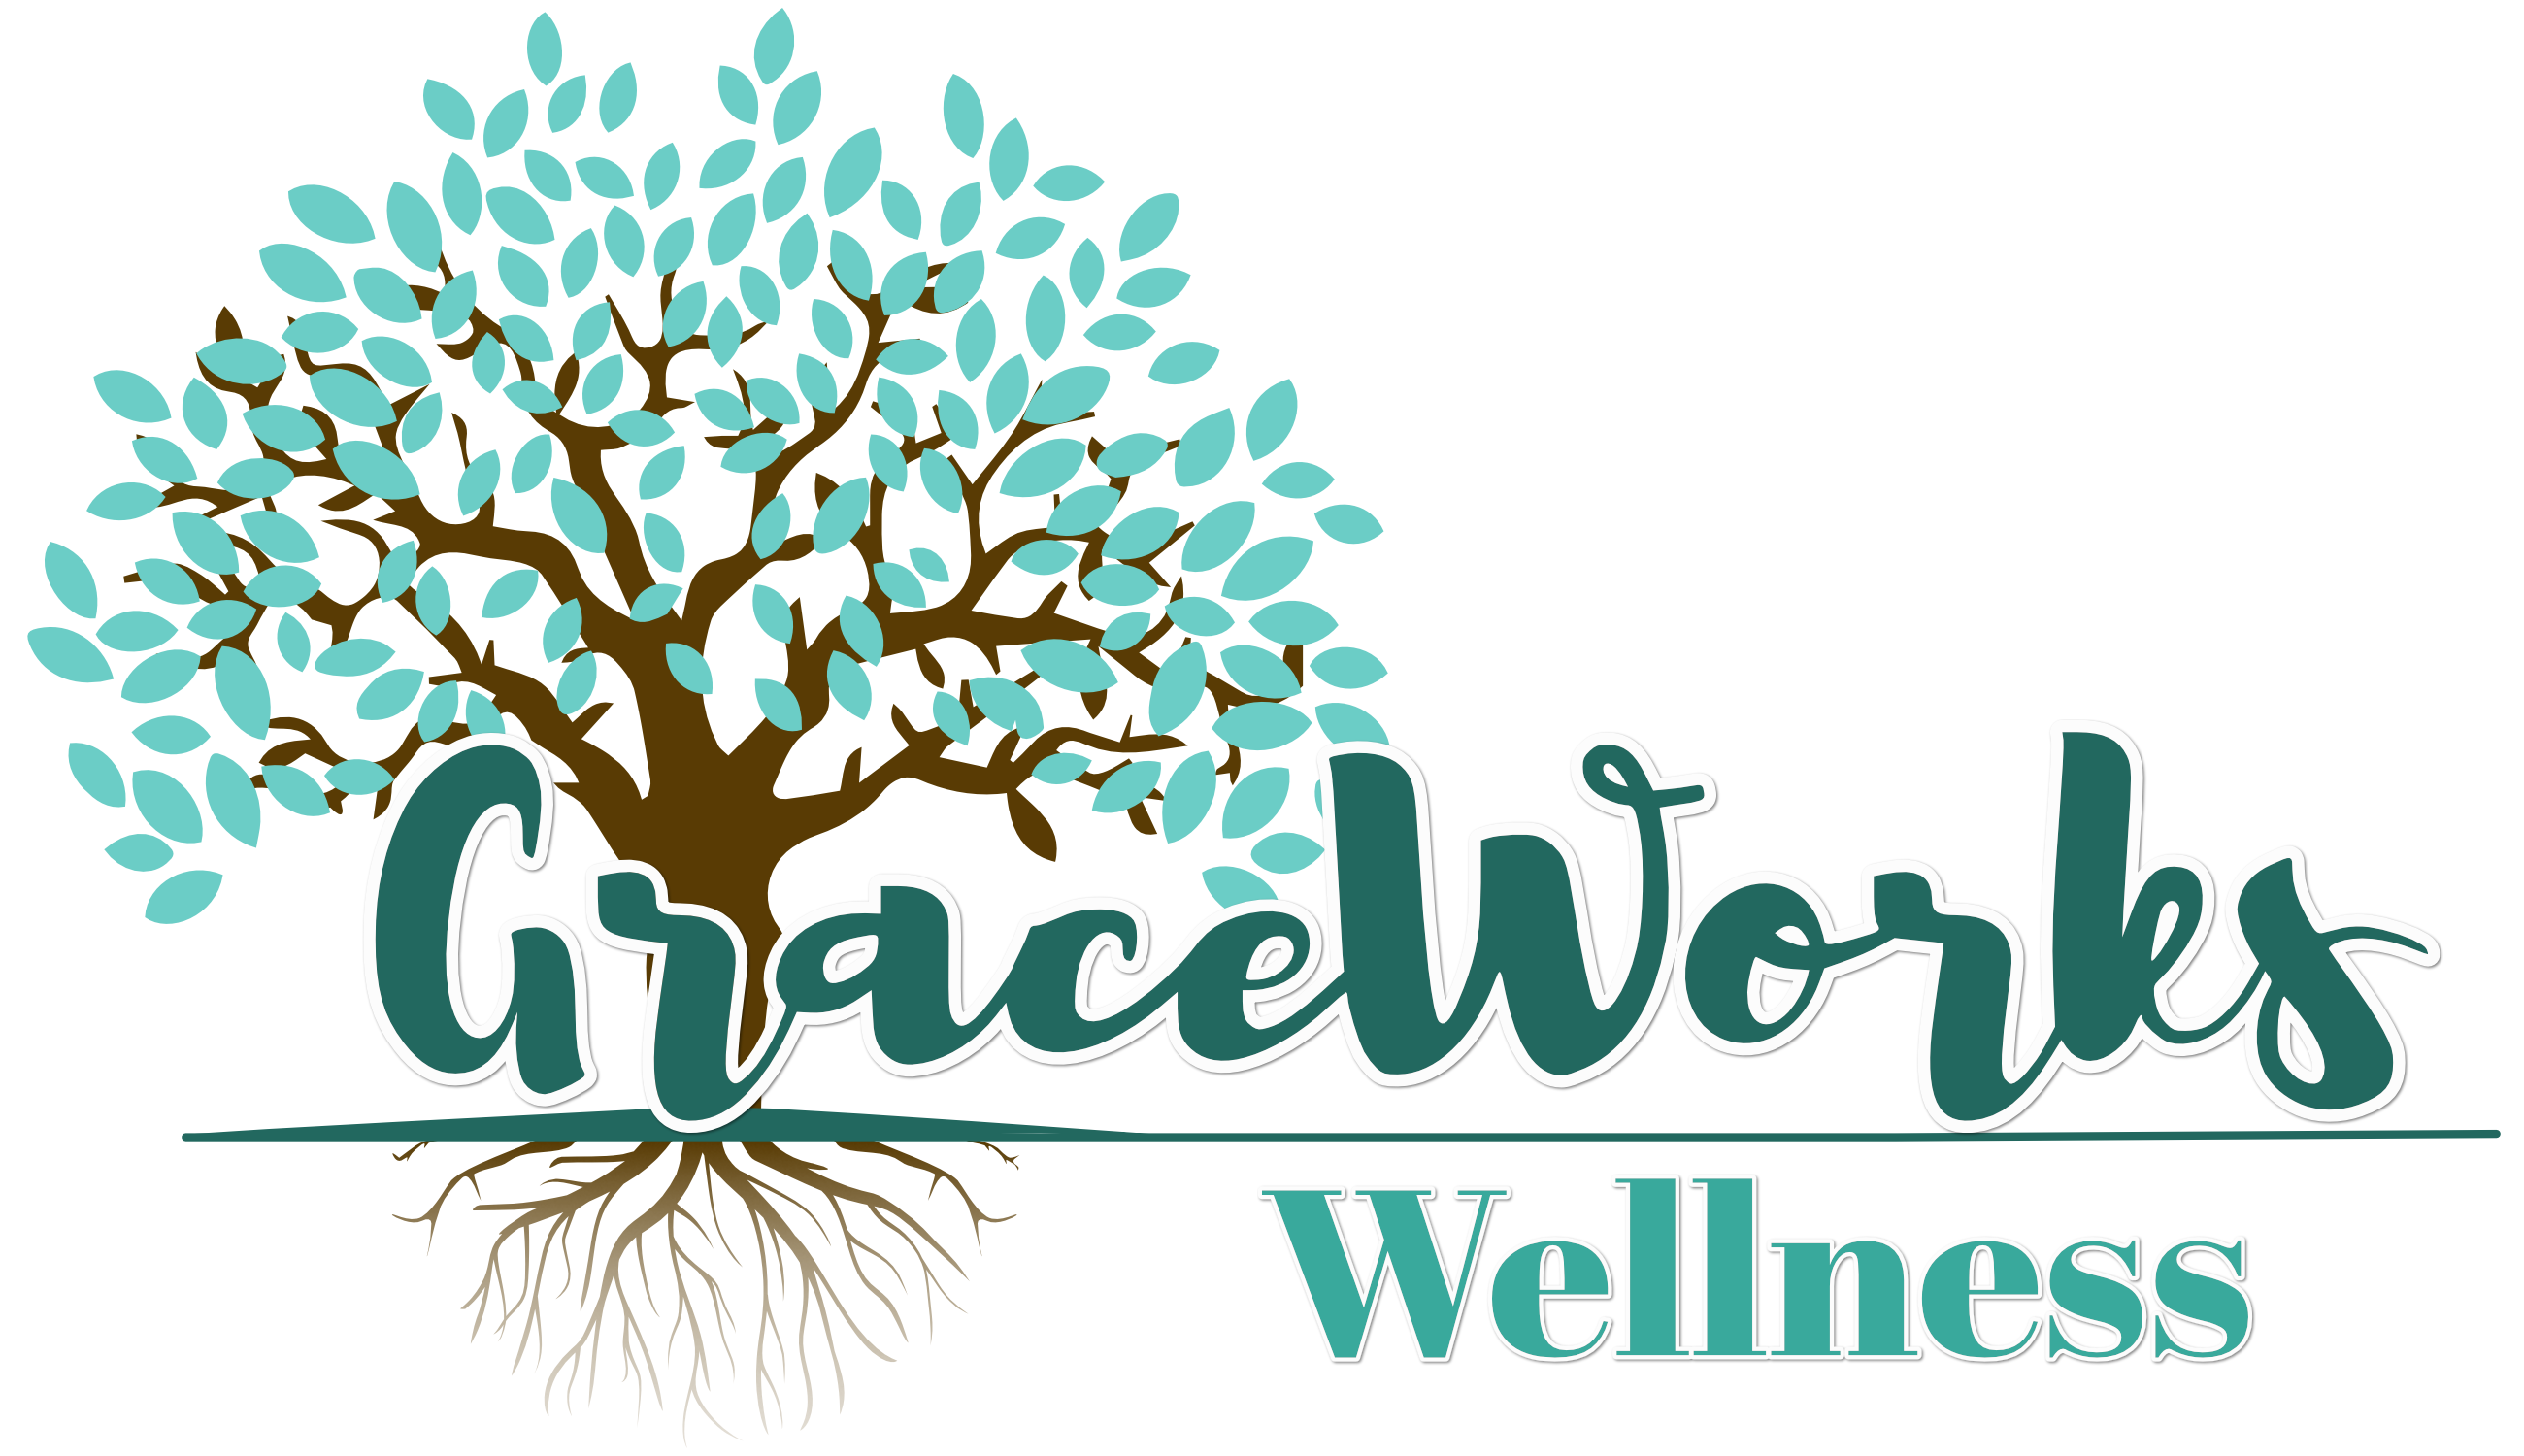 Graceworks Wellness